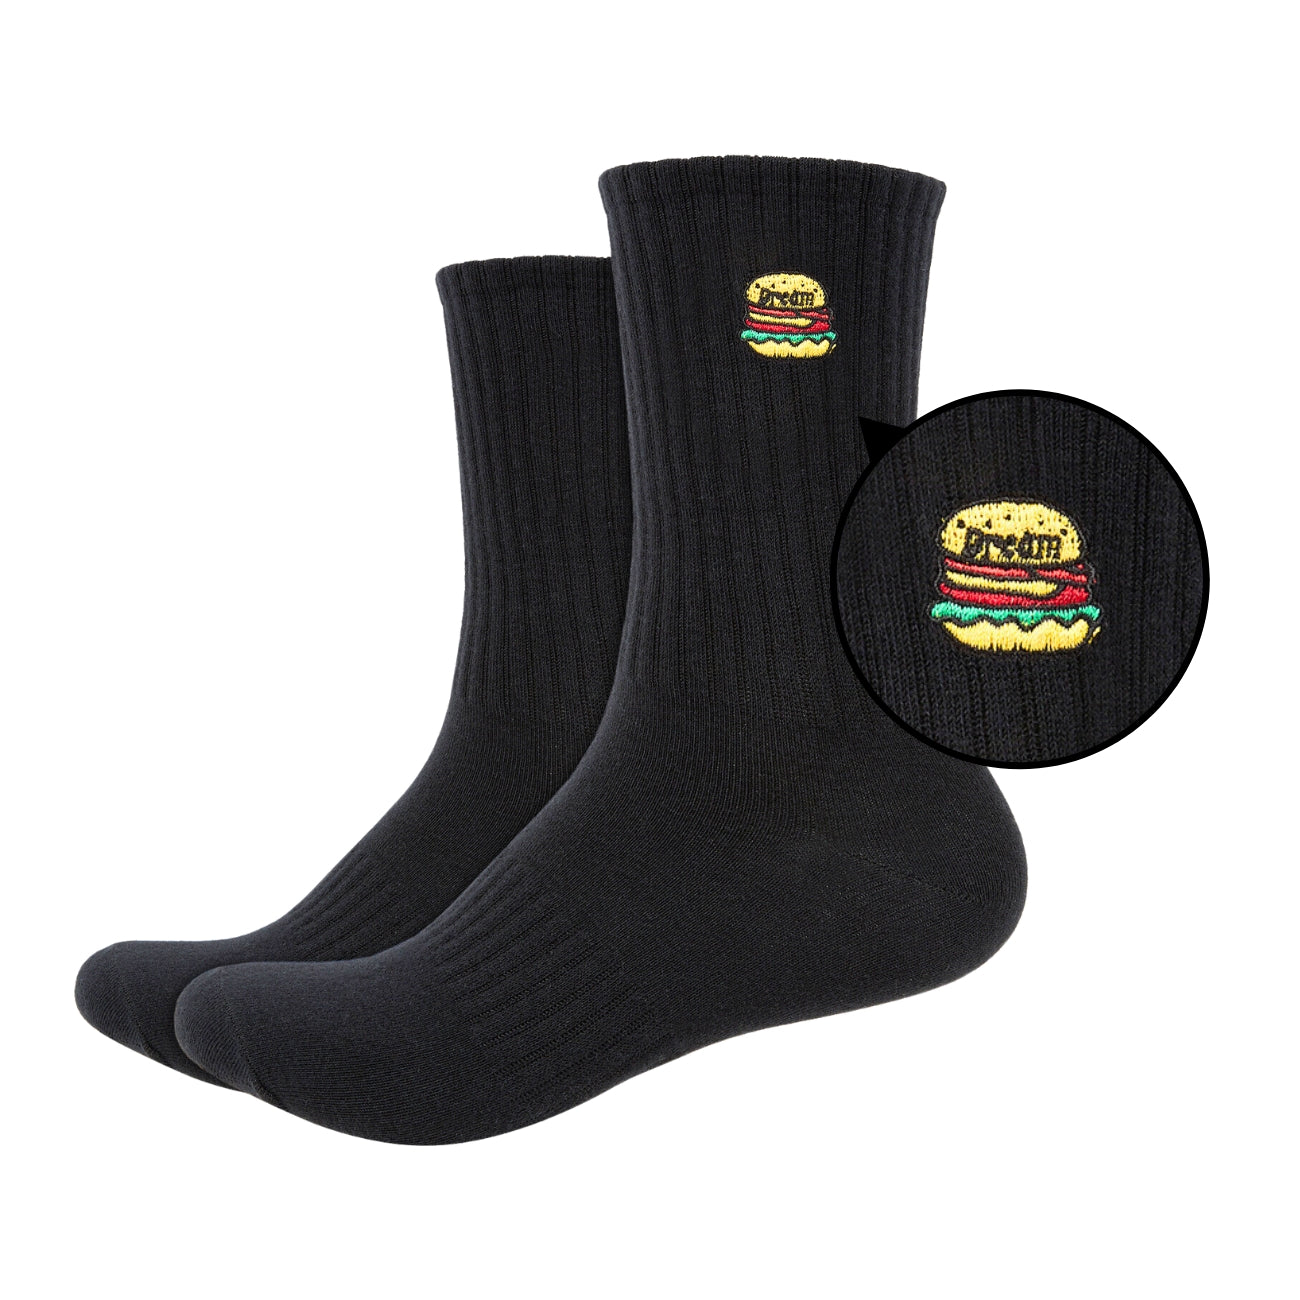 Mens Plain Crew Length Socks with Snacks Patch - IDENTITY Apparel Shop